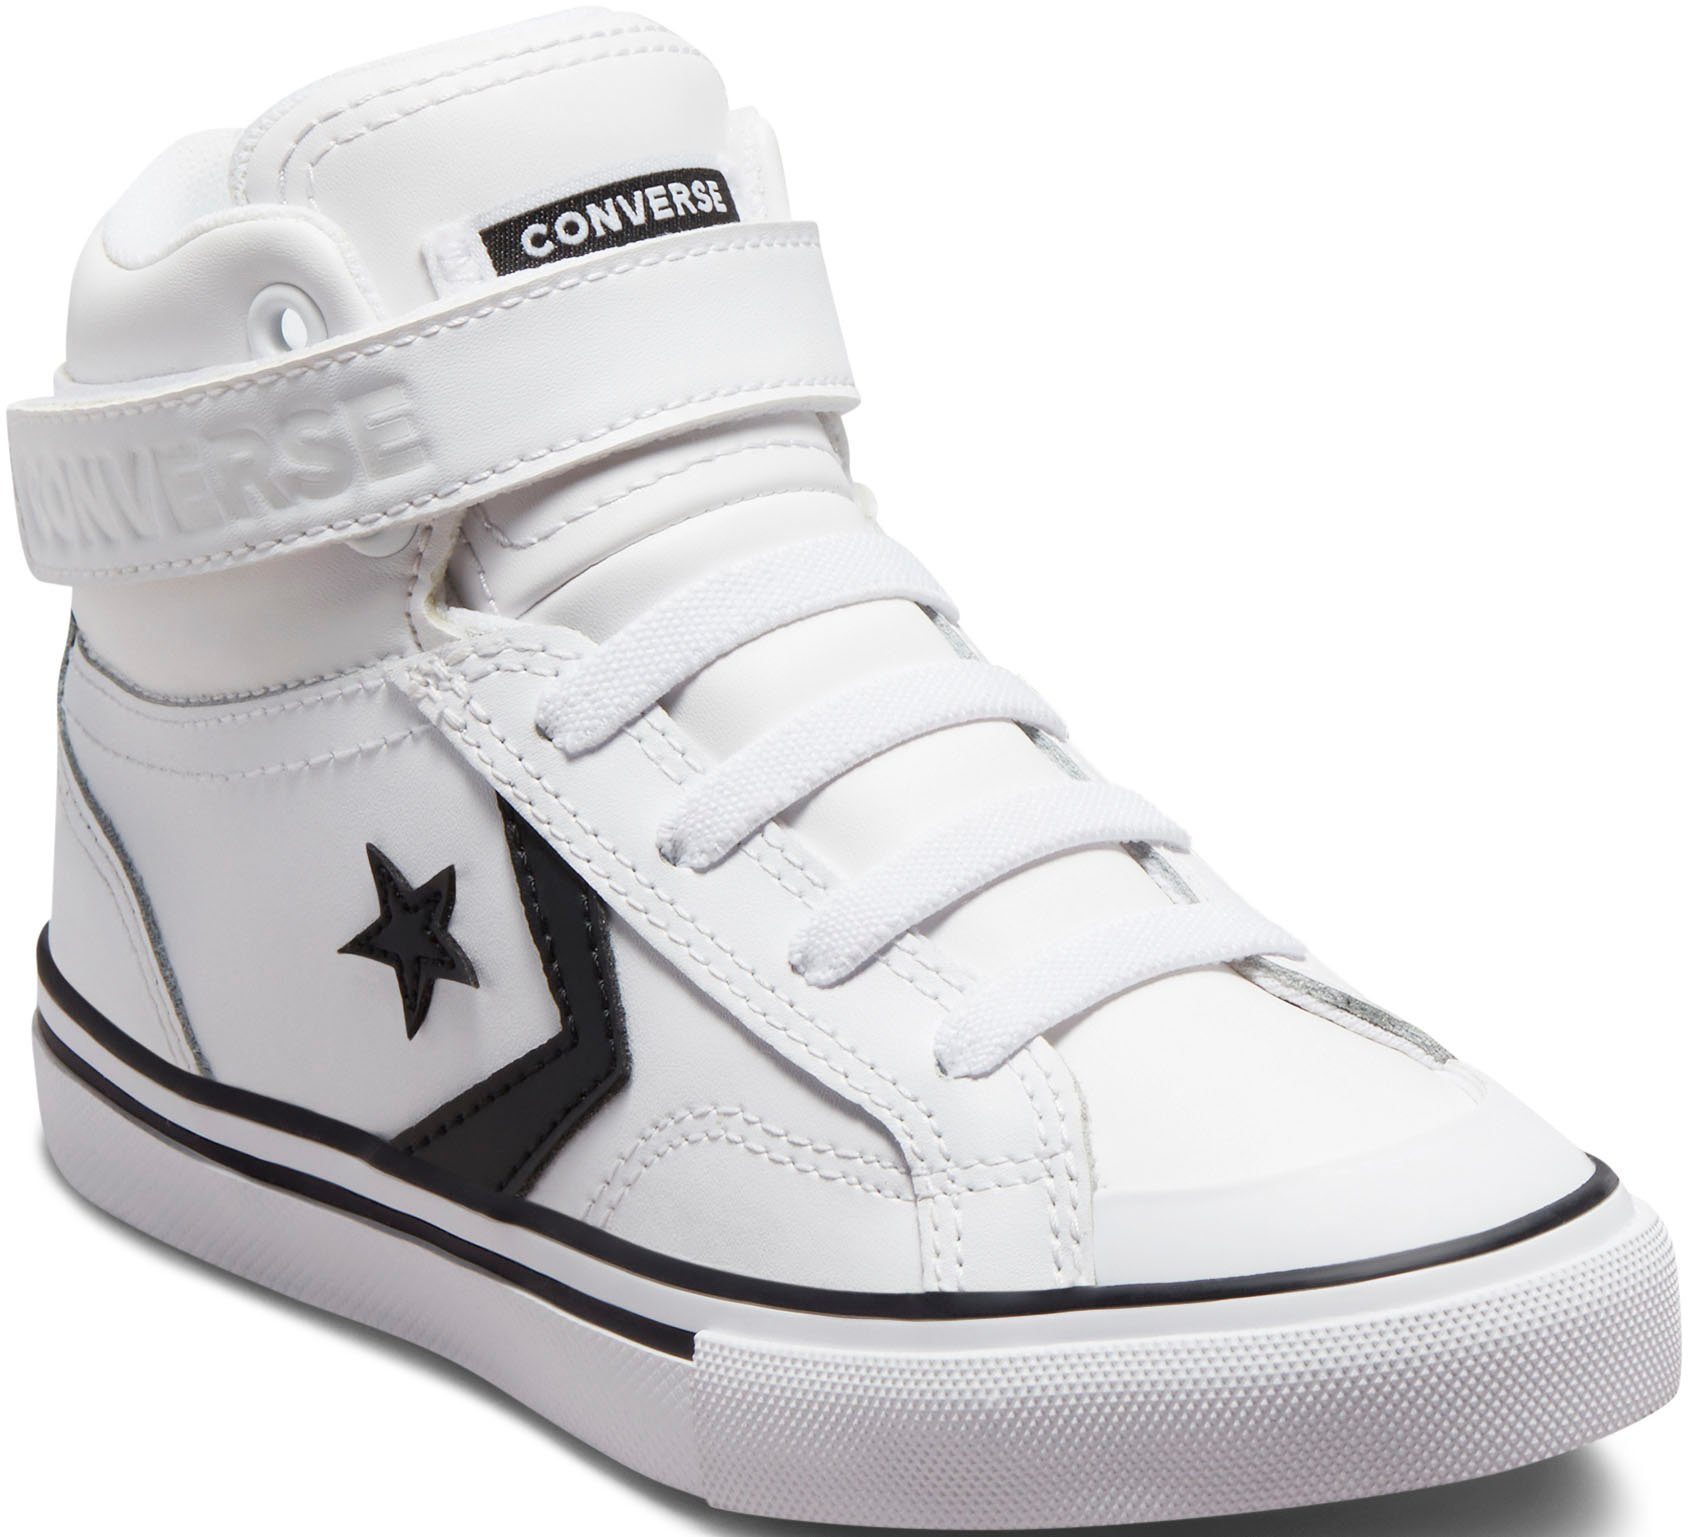 Converse STRAP PRO LEATHER Sneaker BLAZE weiß-schwarz